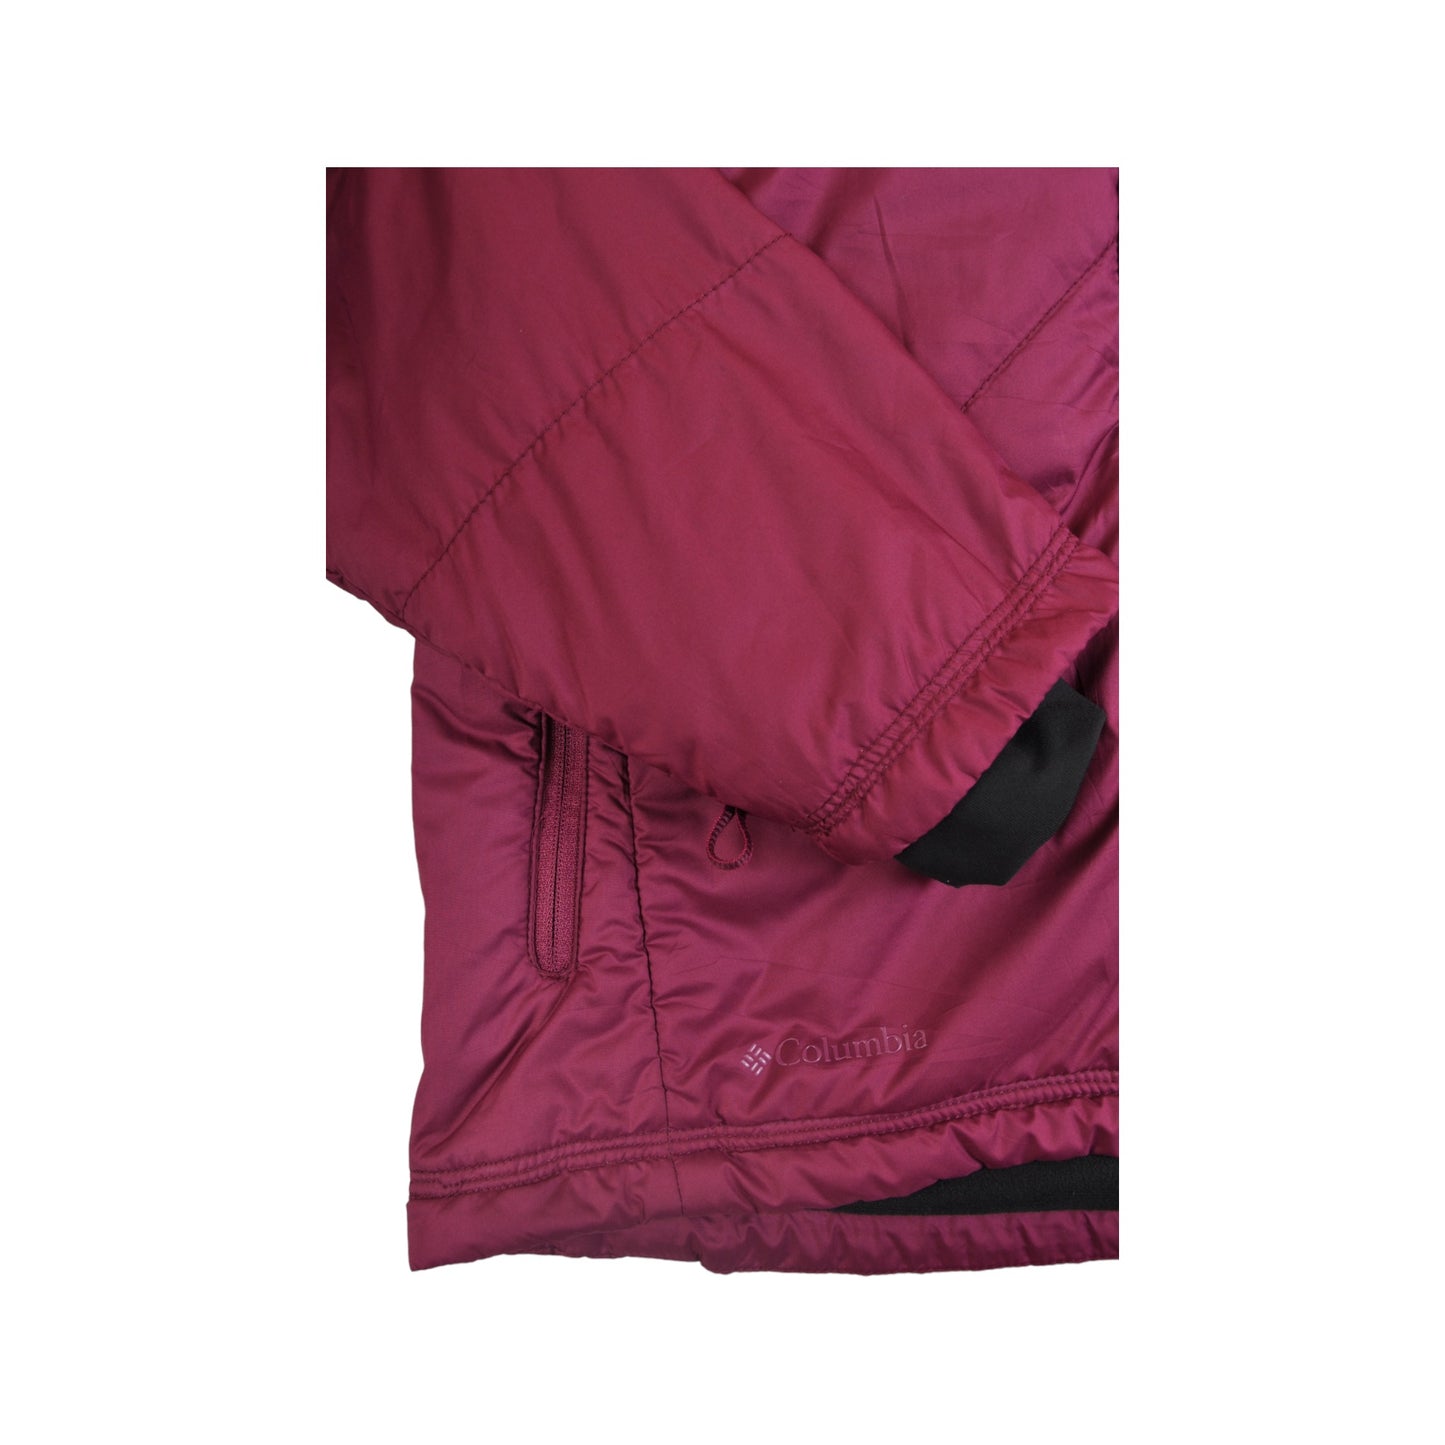 Vintage Columbia Jacket Waterproof Fleece Lining Purple Ladies Small